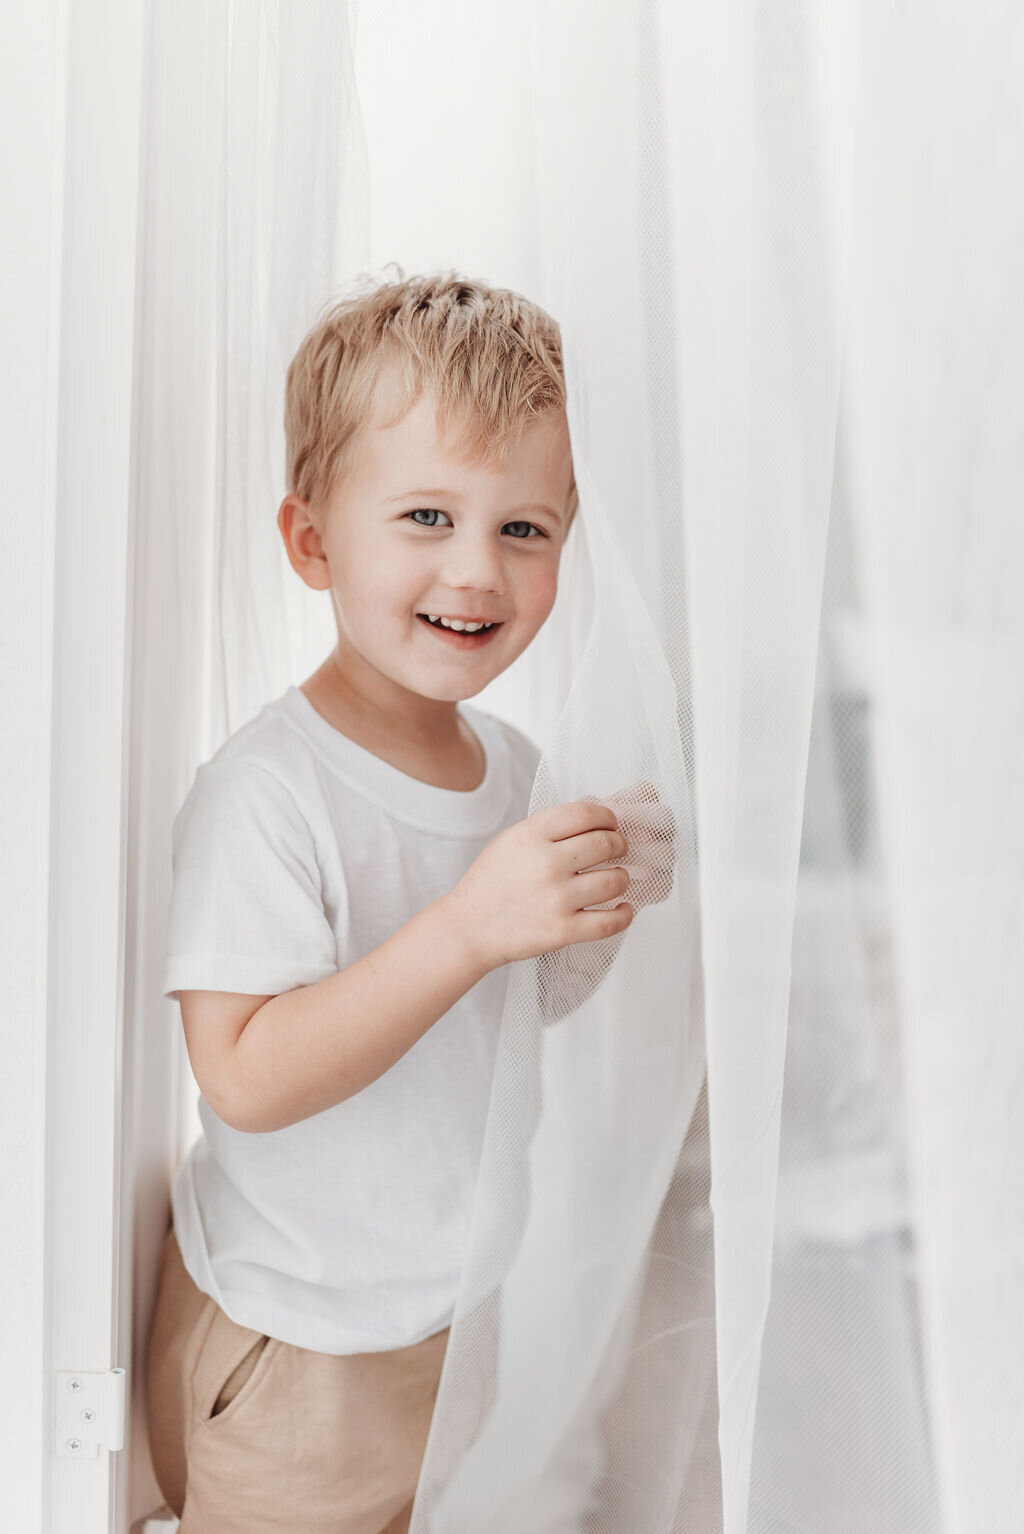 little boy in the curtains of Denver milestone photographer Alyssum Hutchison's studio